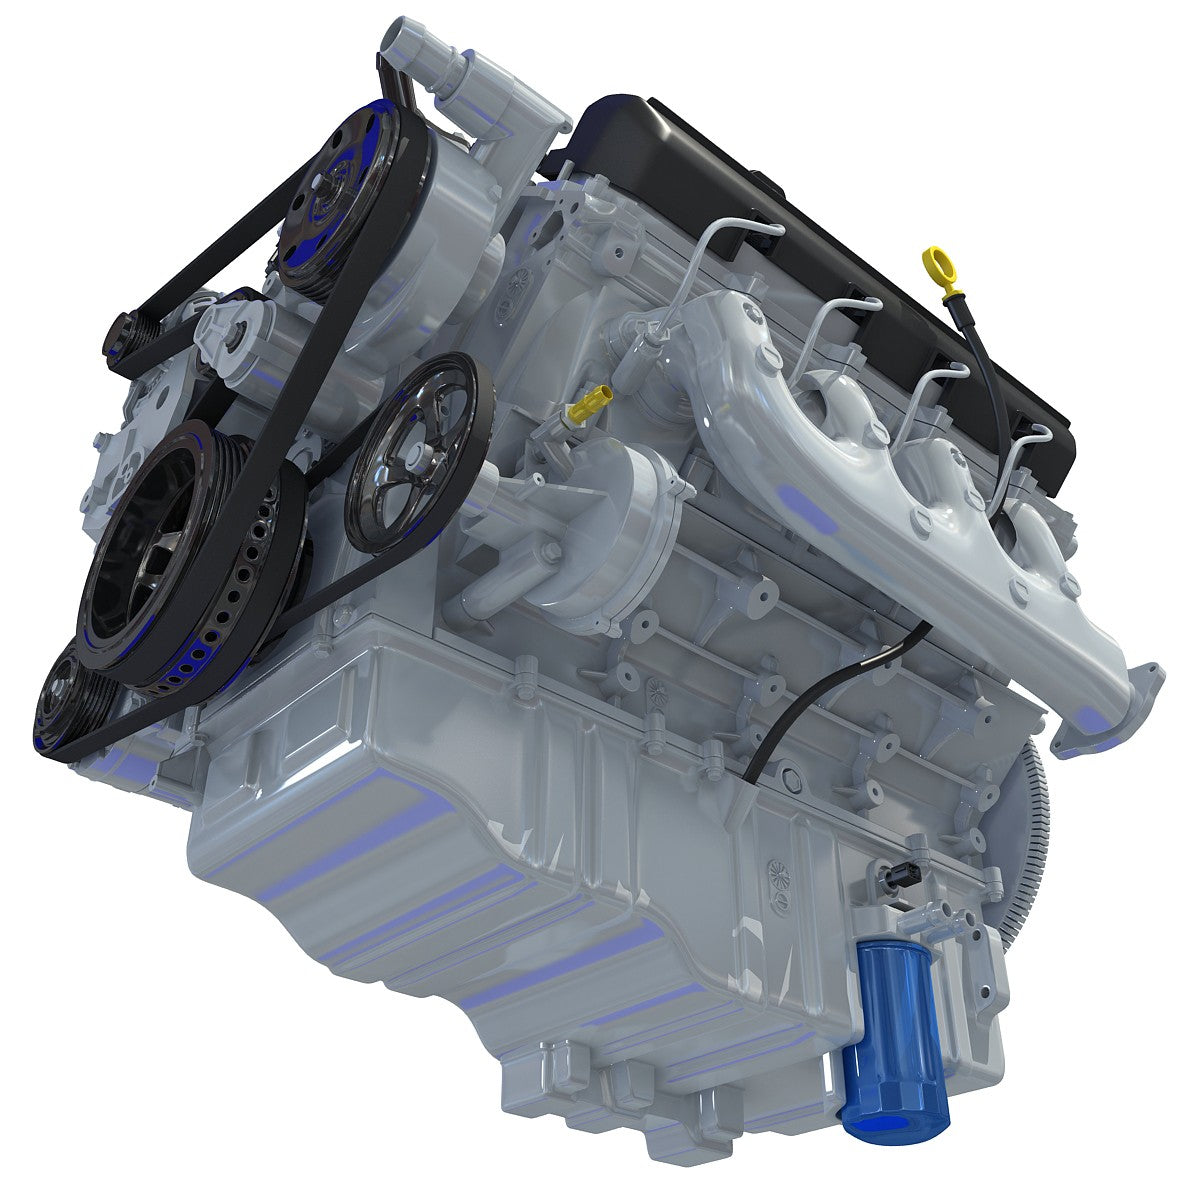 New V8 Chevrolet Silverado Engine